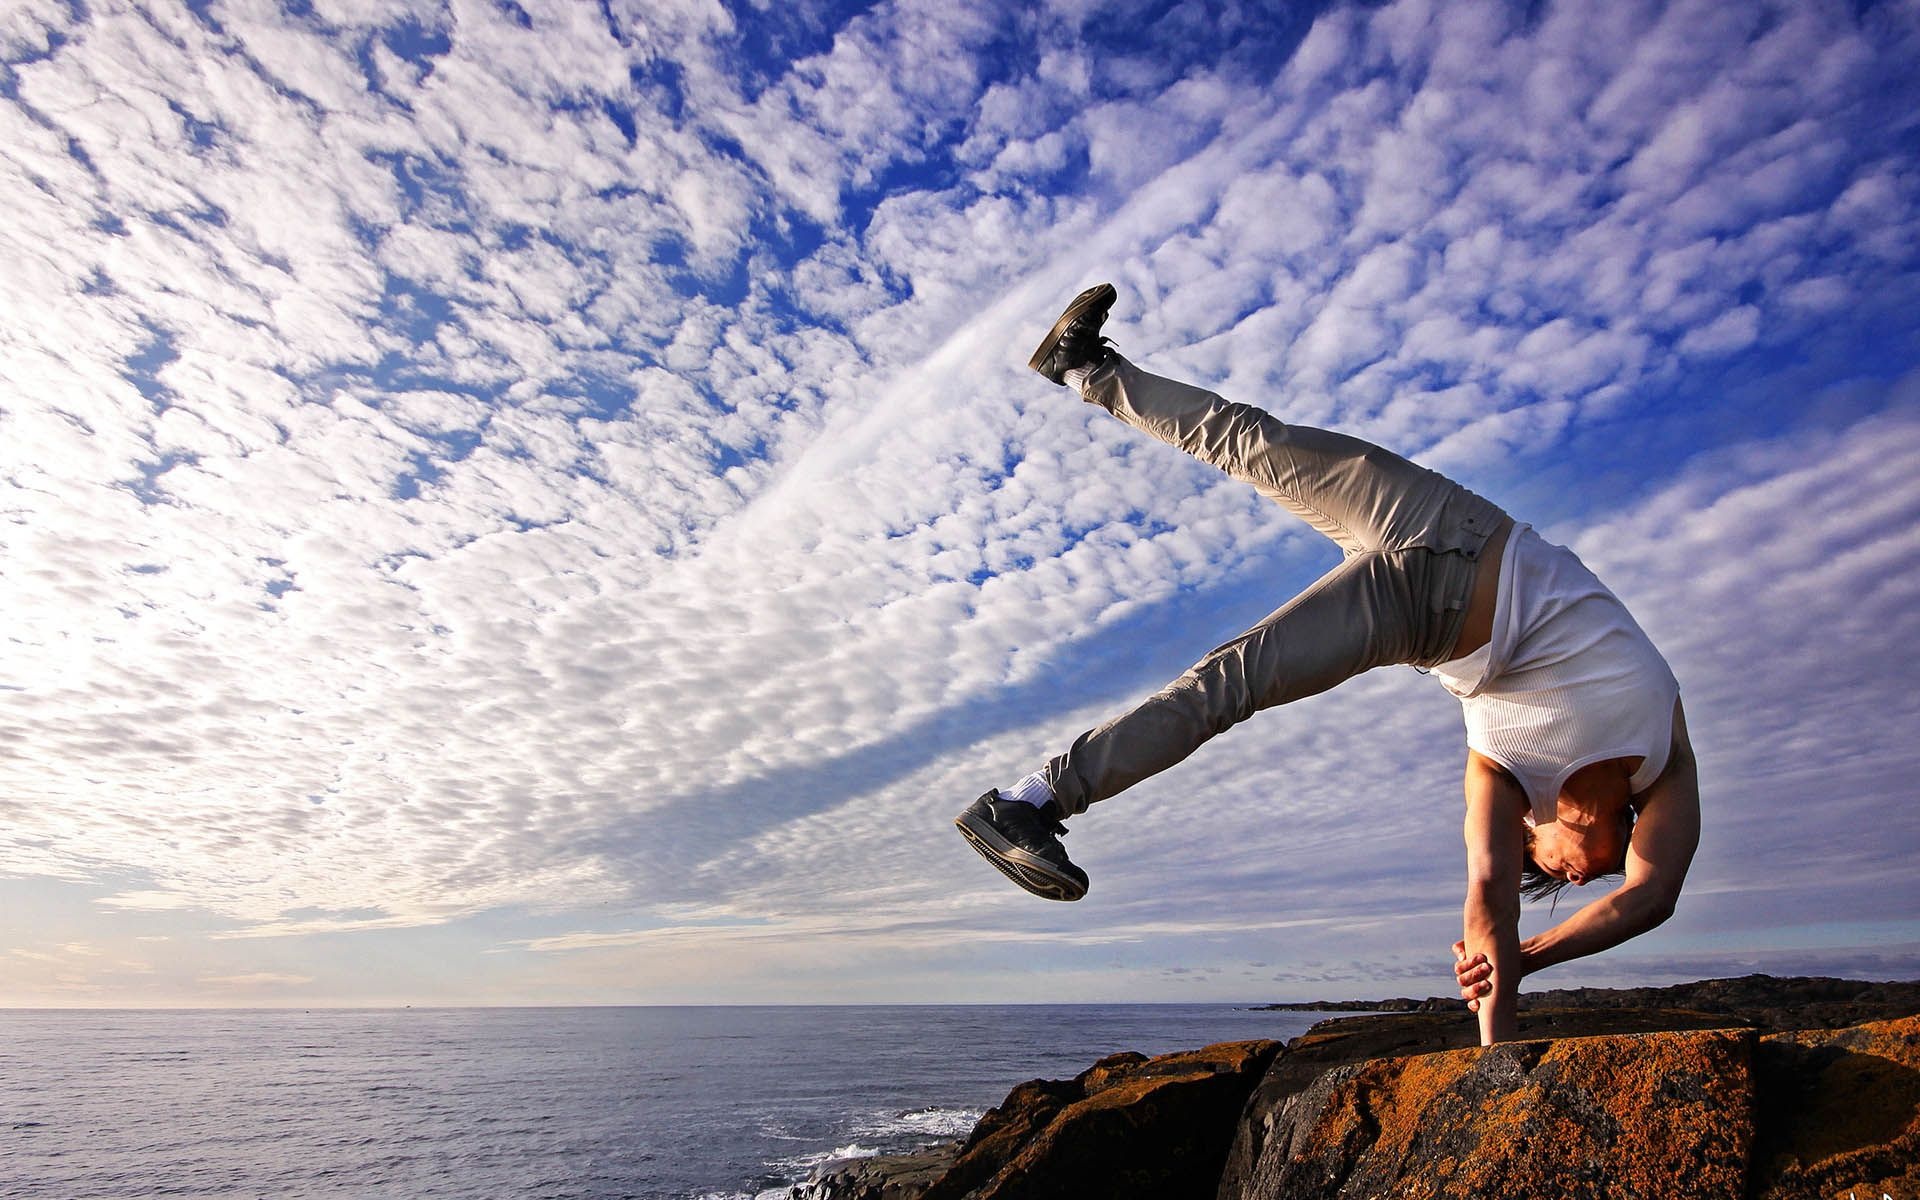 Acrobatic Sports: One arm handstand, Advanced hand balancing, Gymnastics movement. 1920x1200 HD Wallpaper.